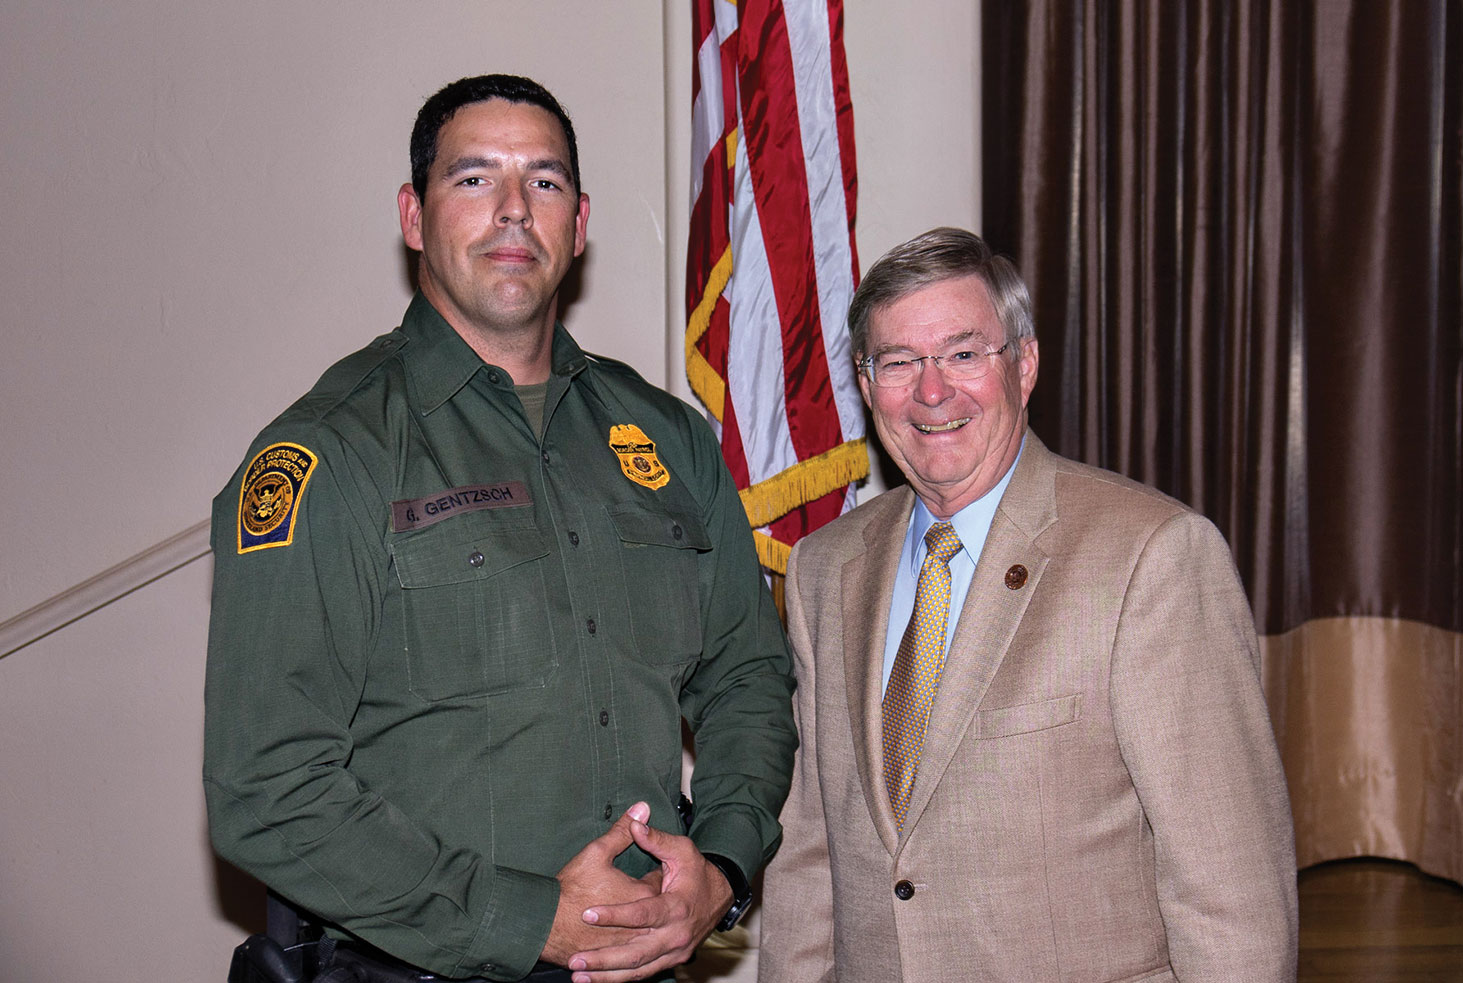 Border Patrol Officer George Gentzsch meeting with Vince Leach